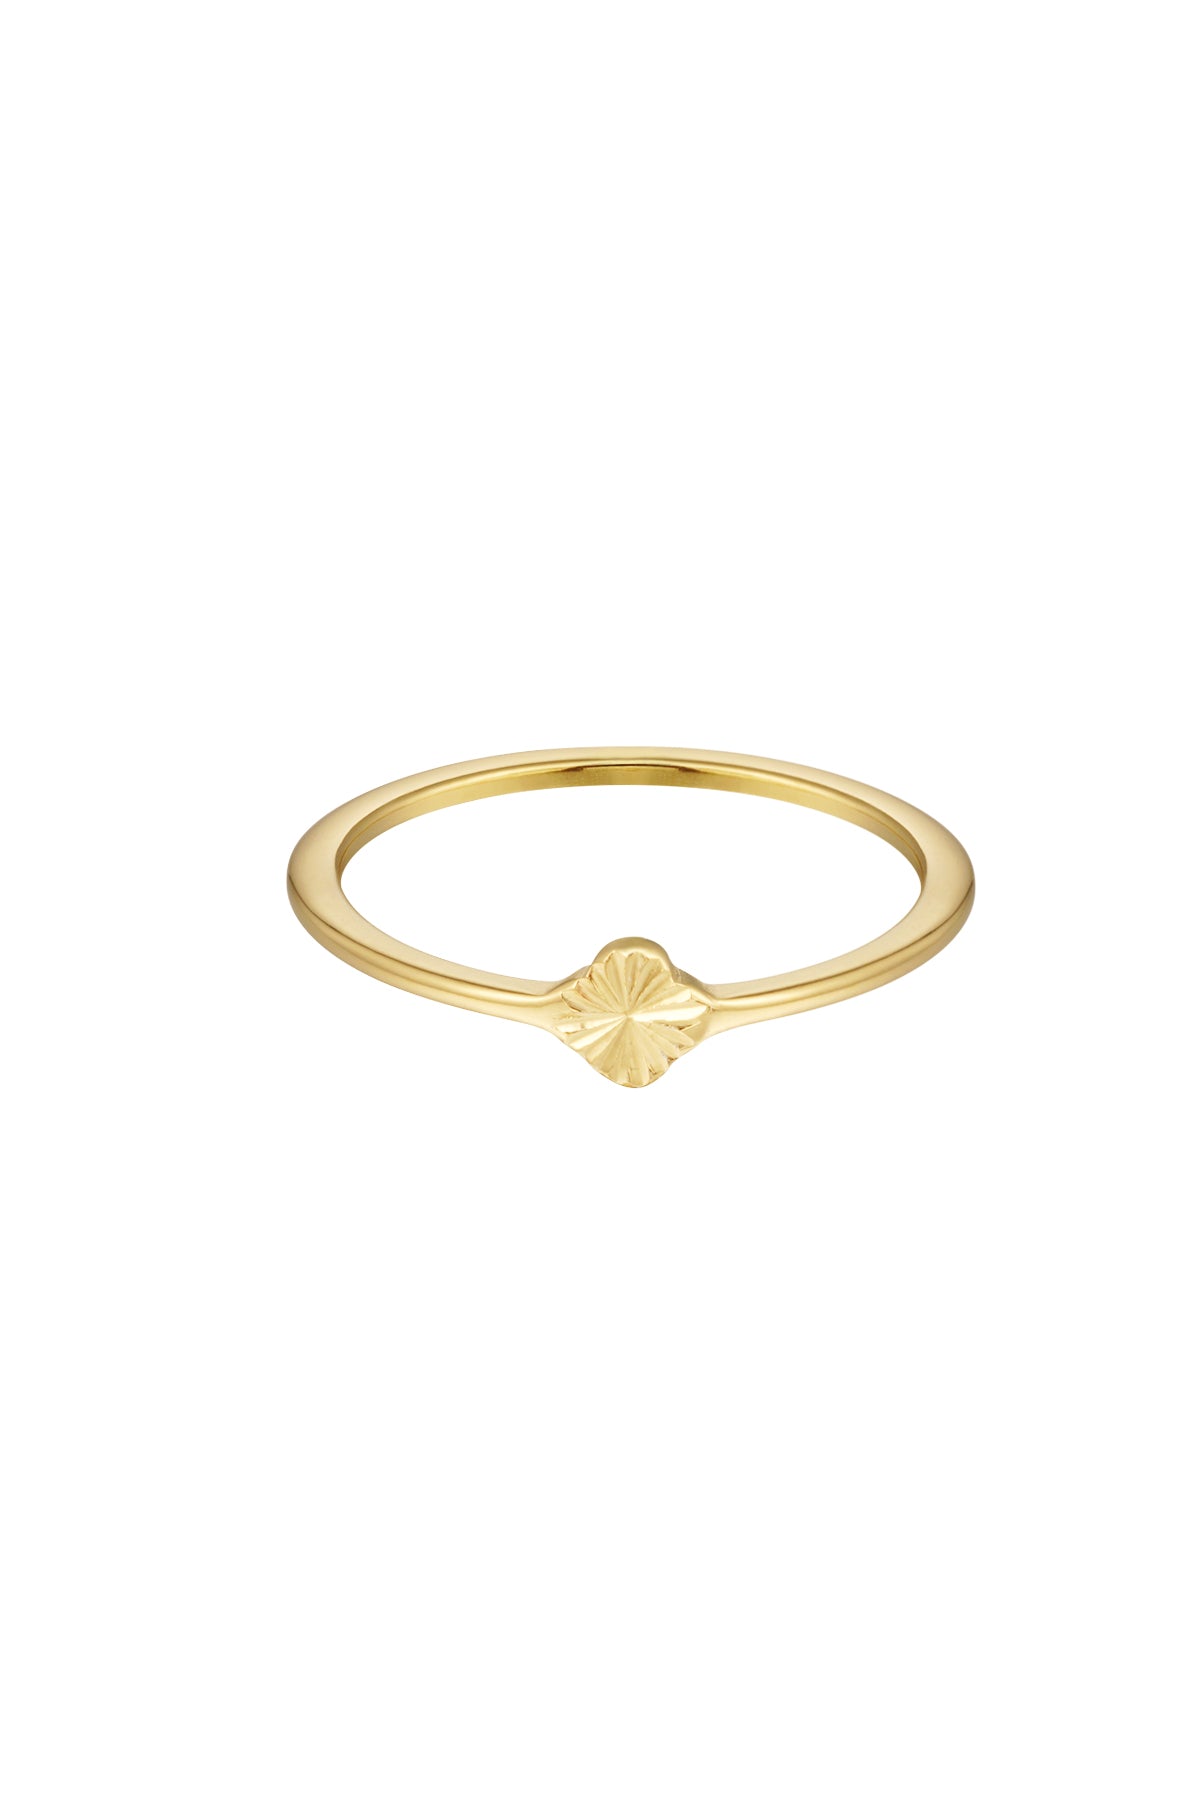 "Mae" Ring gold